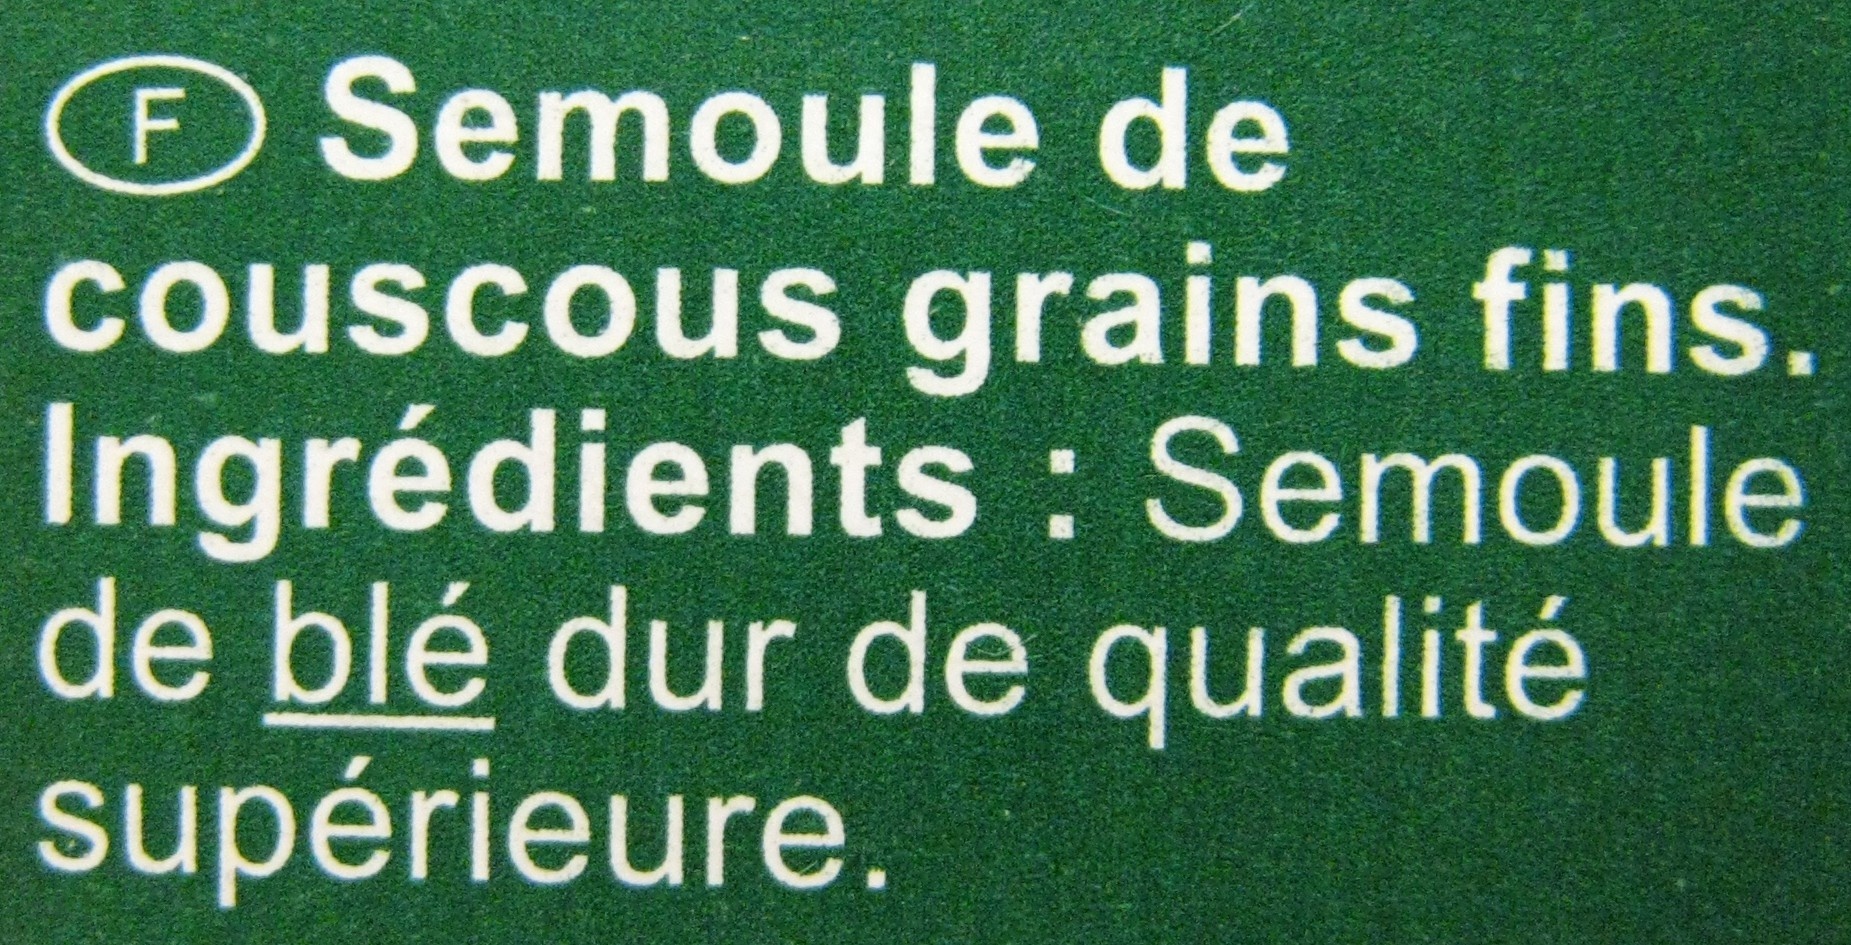 Couscous Grain fin - Składniki - fr